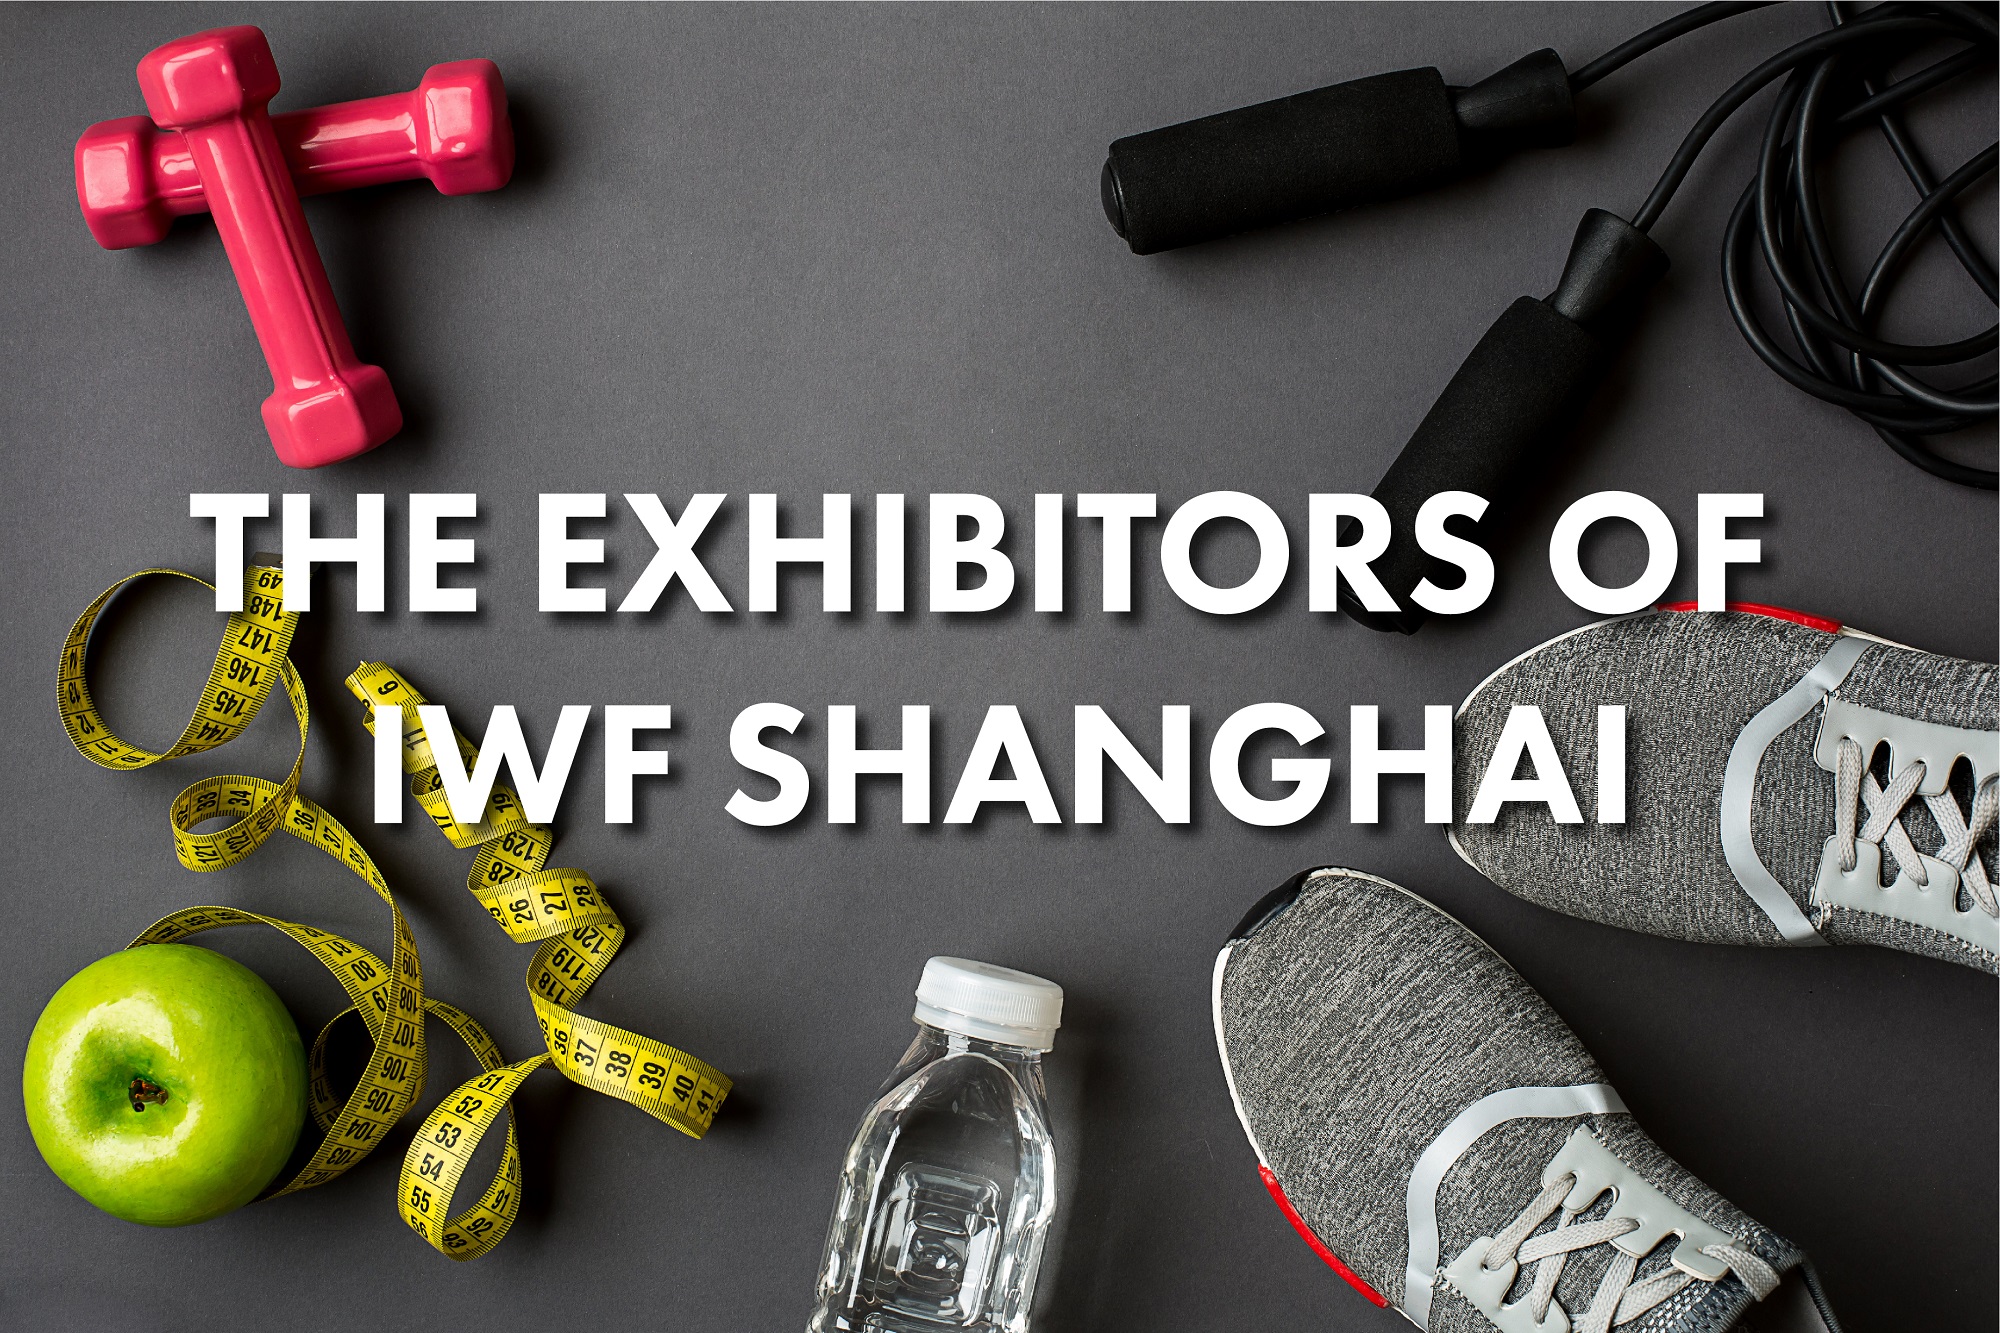 The Exhibitors in IWF SHANGHAI